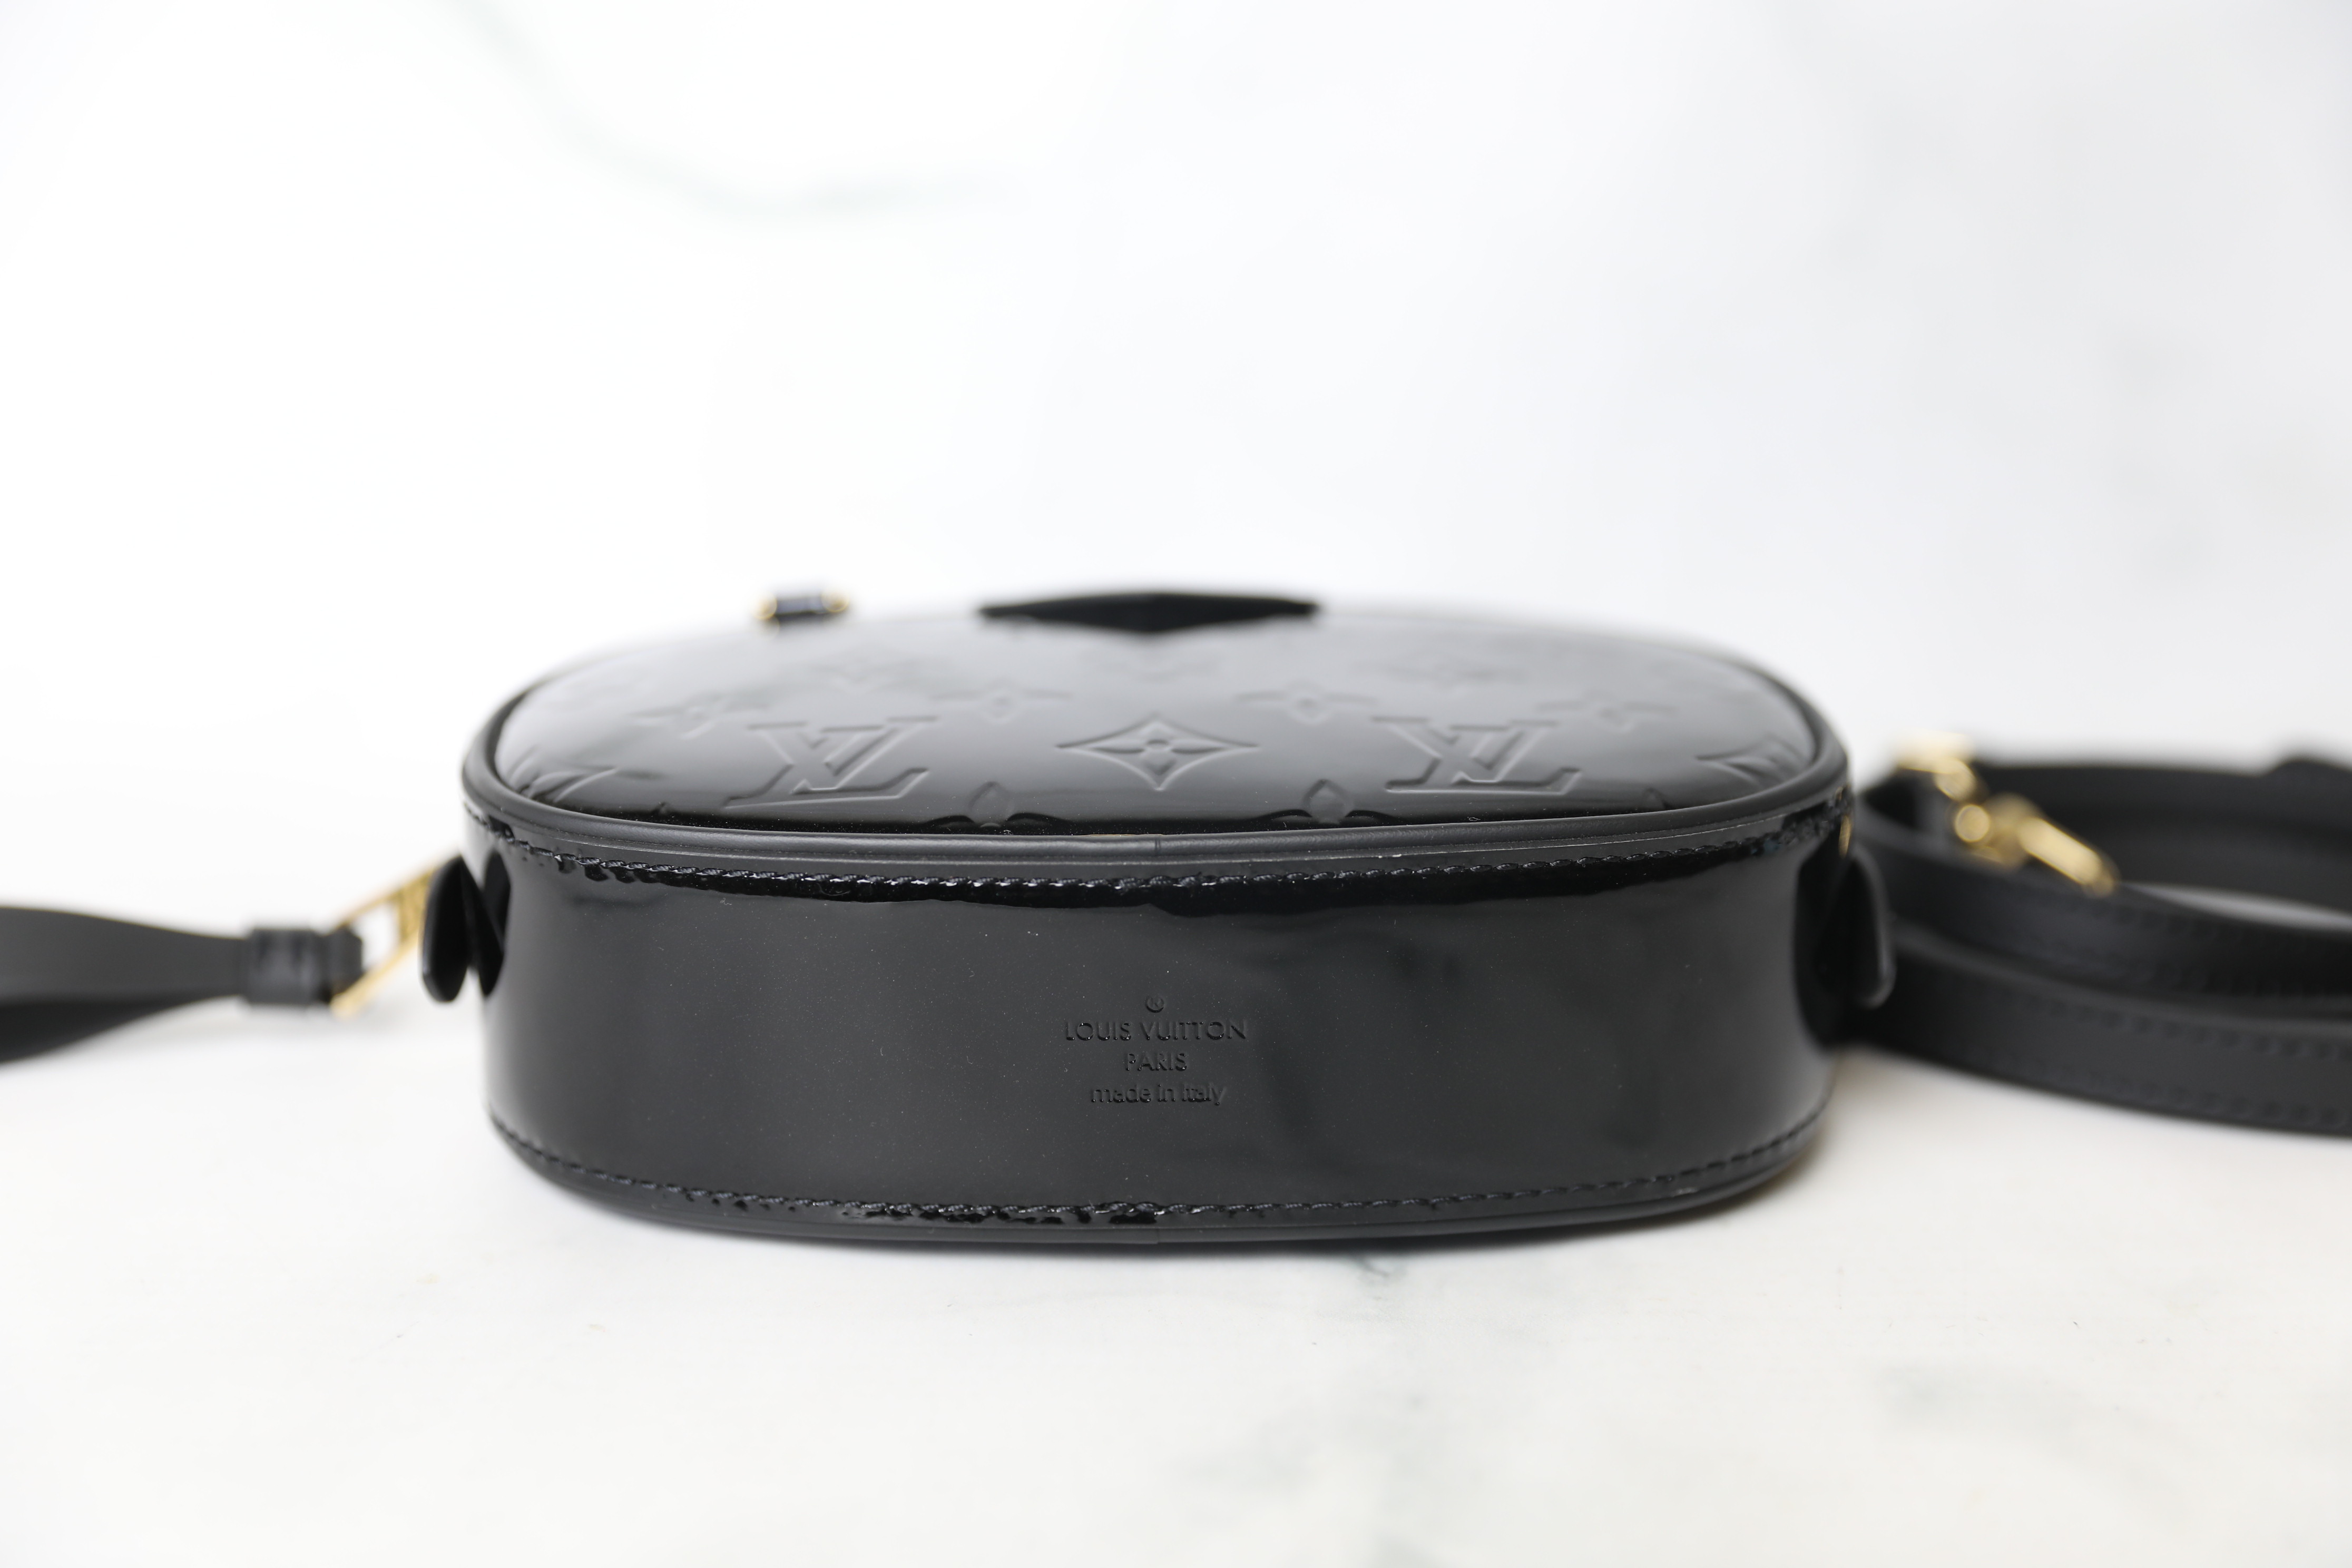 Louis Vuitton Introduces a Brand New Belt Bag In Monogram Vernis -  PurseBlog